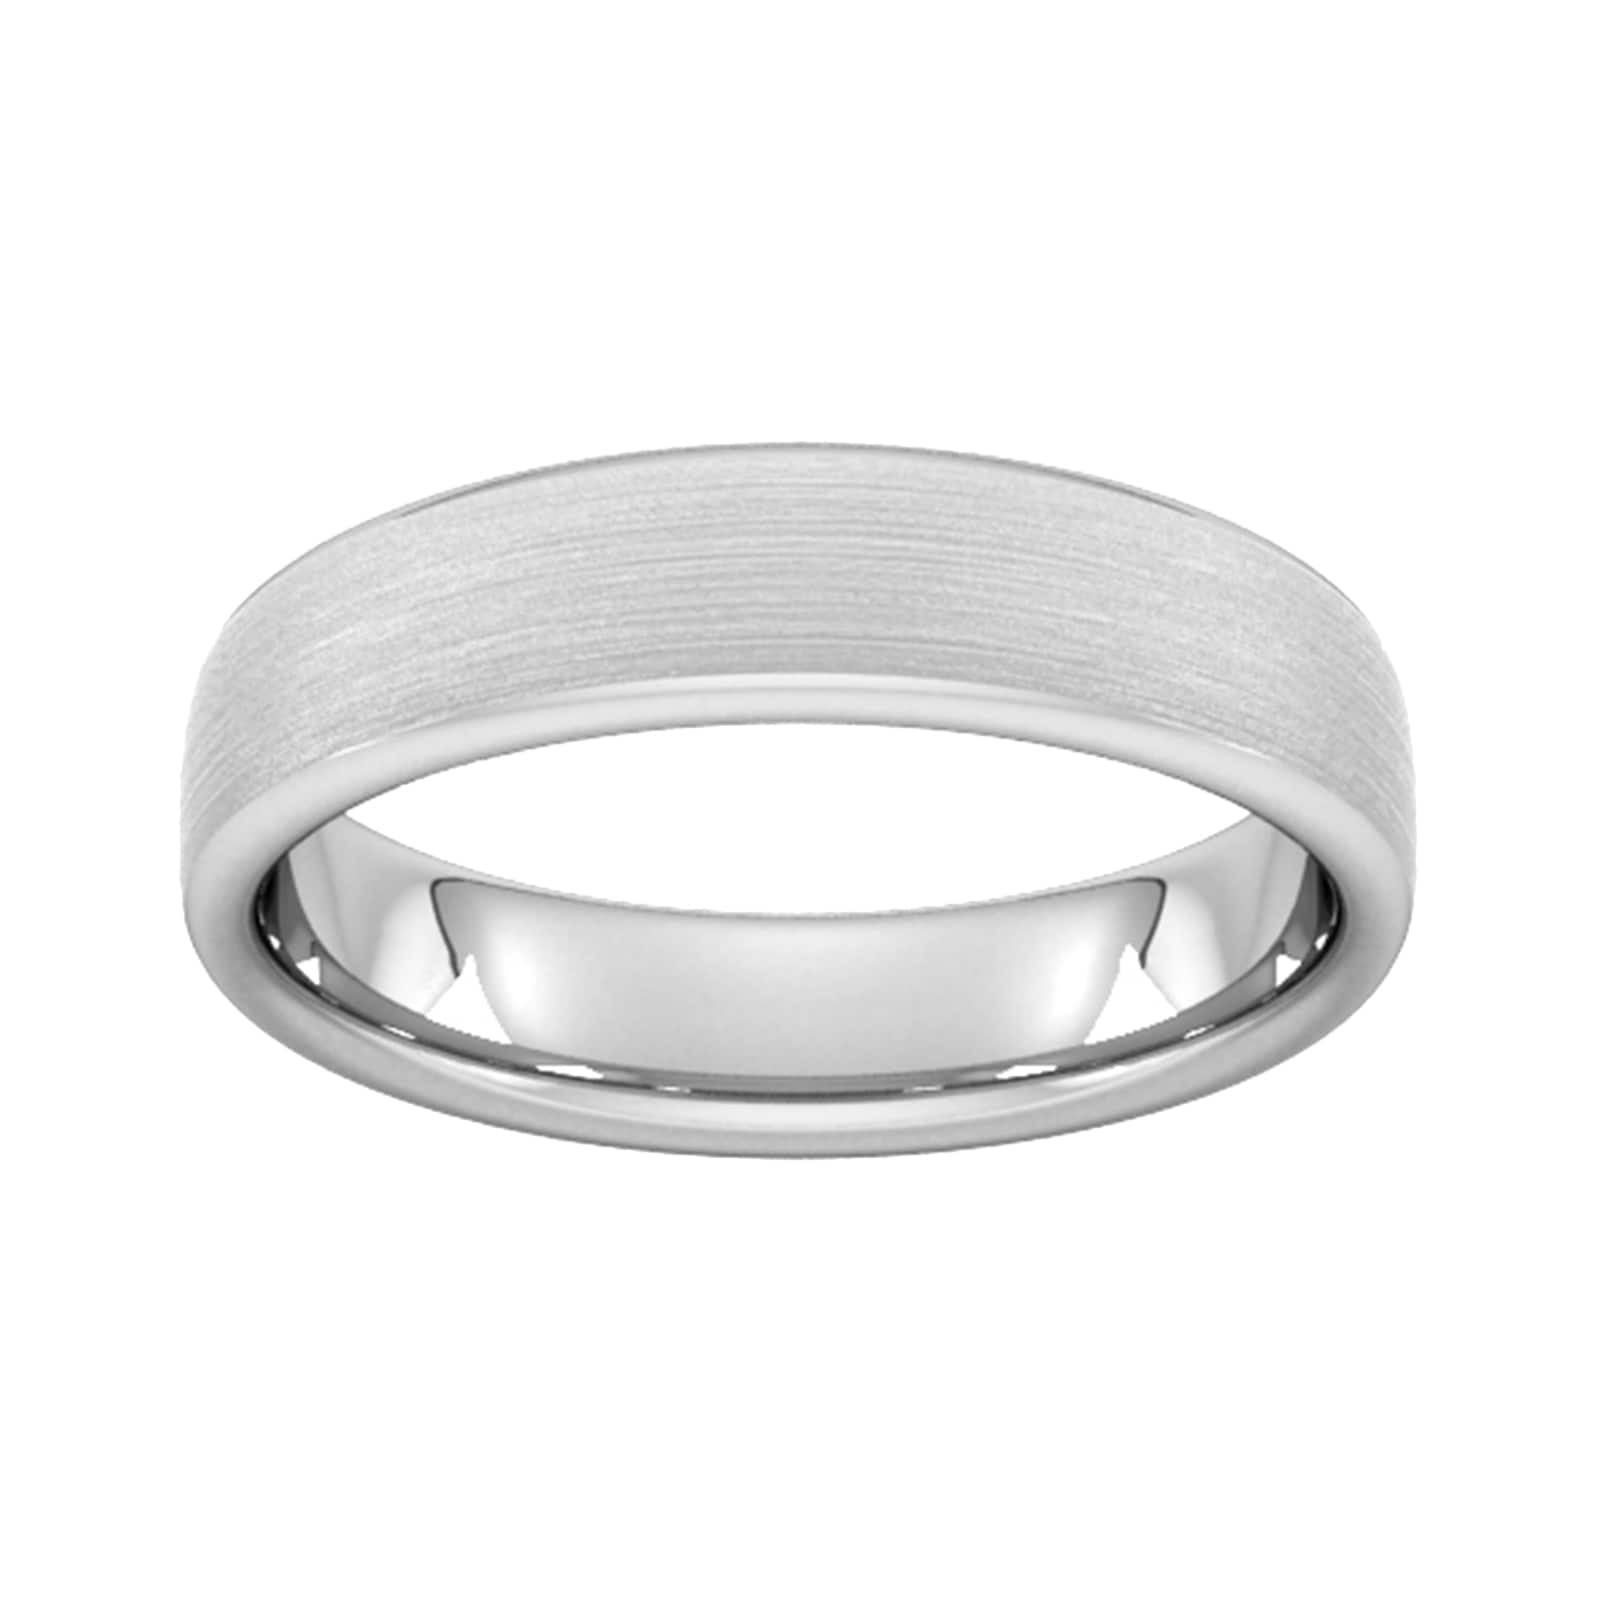 5mm Slight Court Standard Matt Finished Wedding Ring In 950 Palladium - Ring Size U